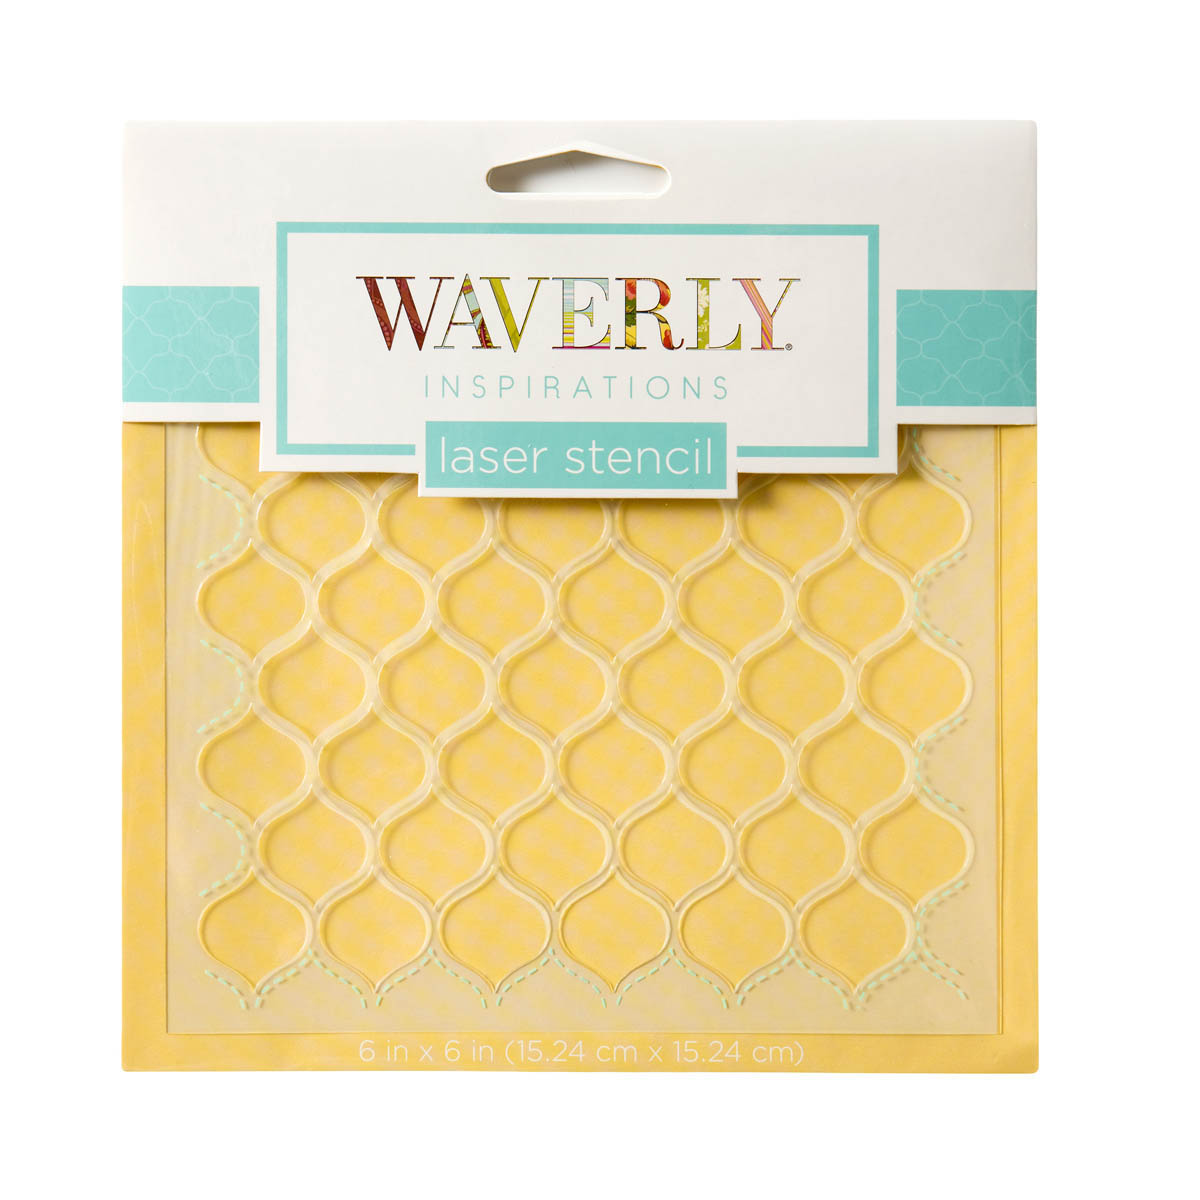 Waverly ® Inspirations Laser Stencils - Accent - Tear Drop, 6